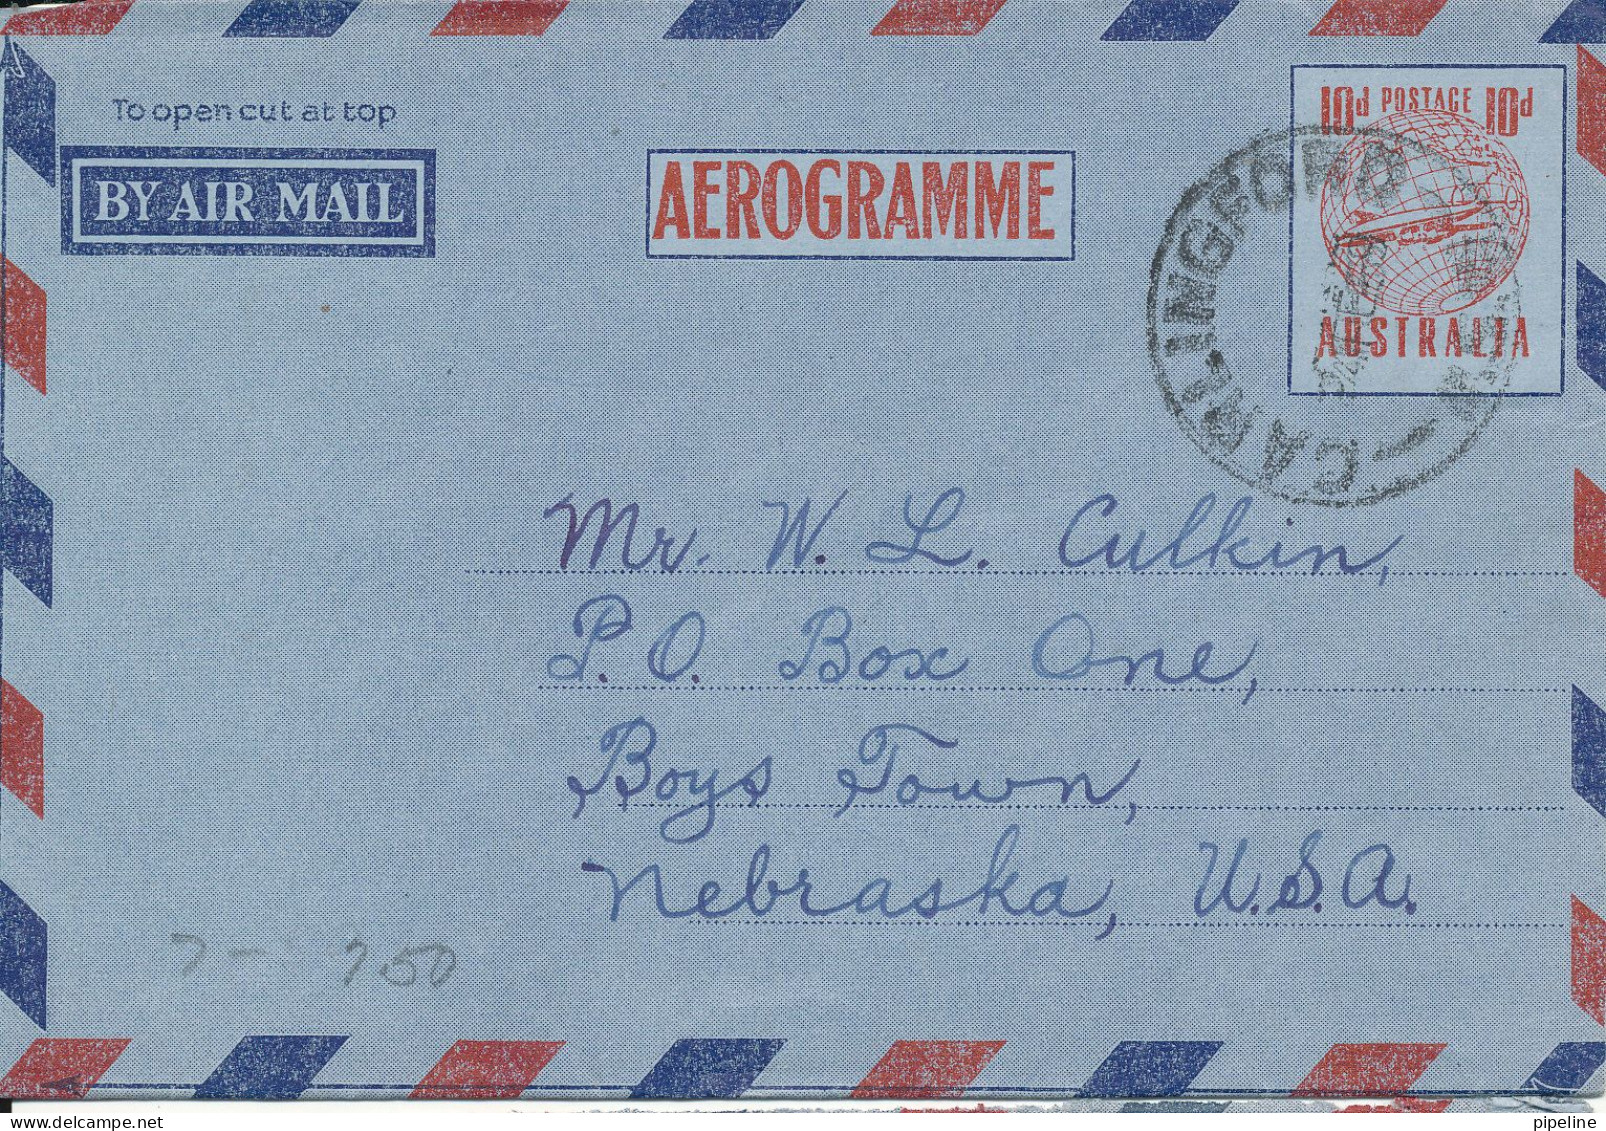 Australia Aerogramme Sent To USA Carlingford 24-2-1959 - Aerogramme